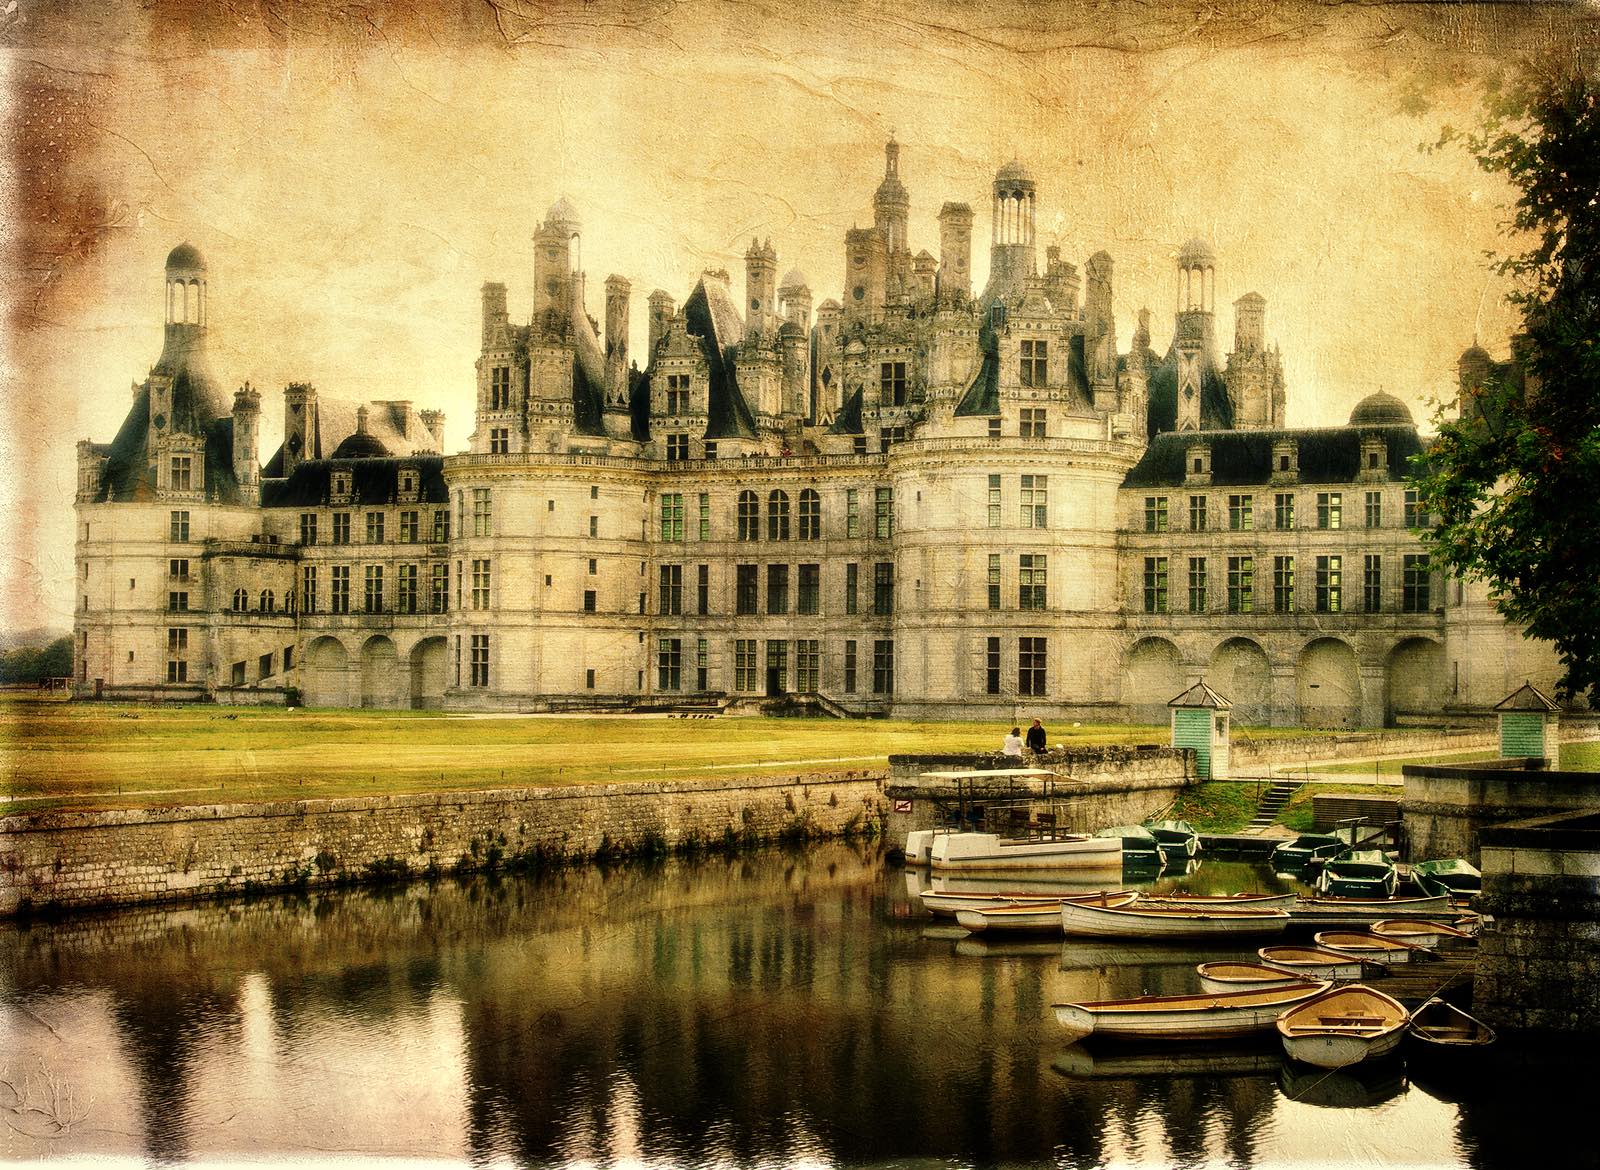 Chambord castle - artistic retro styled picture